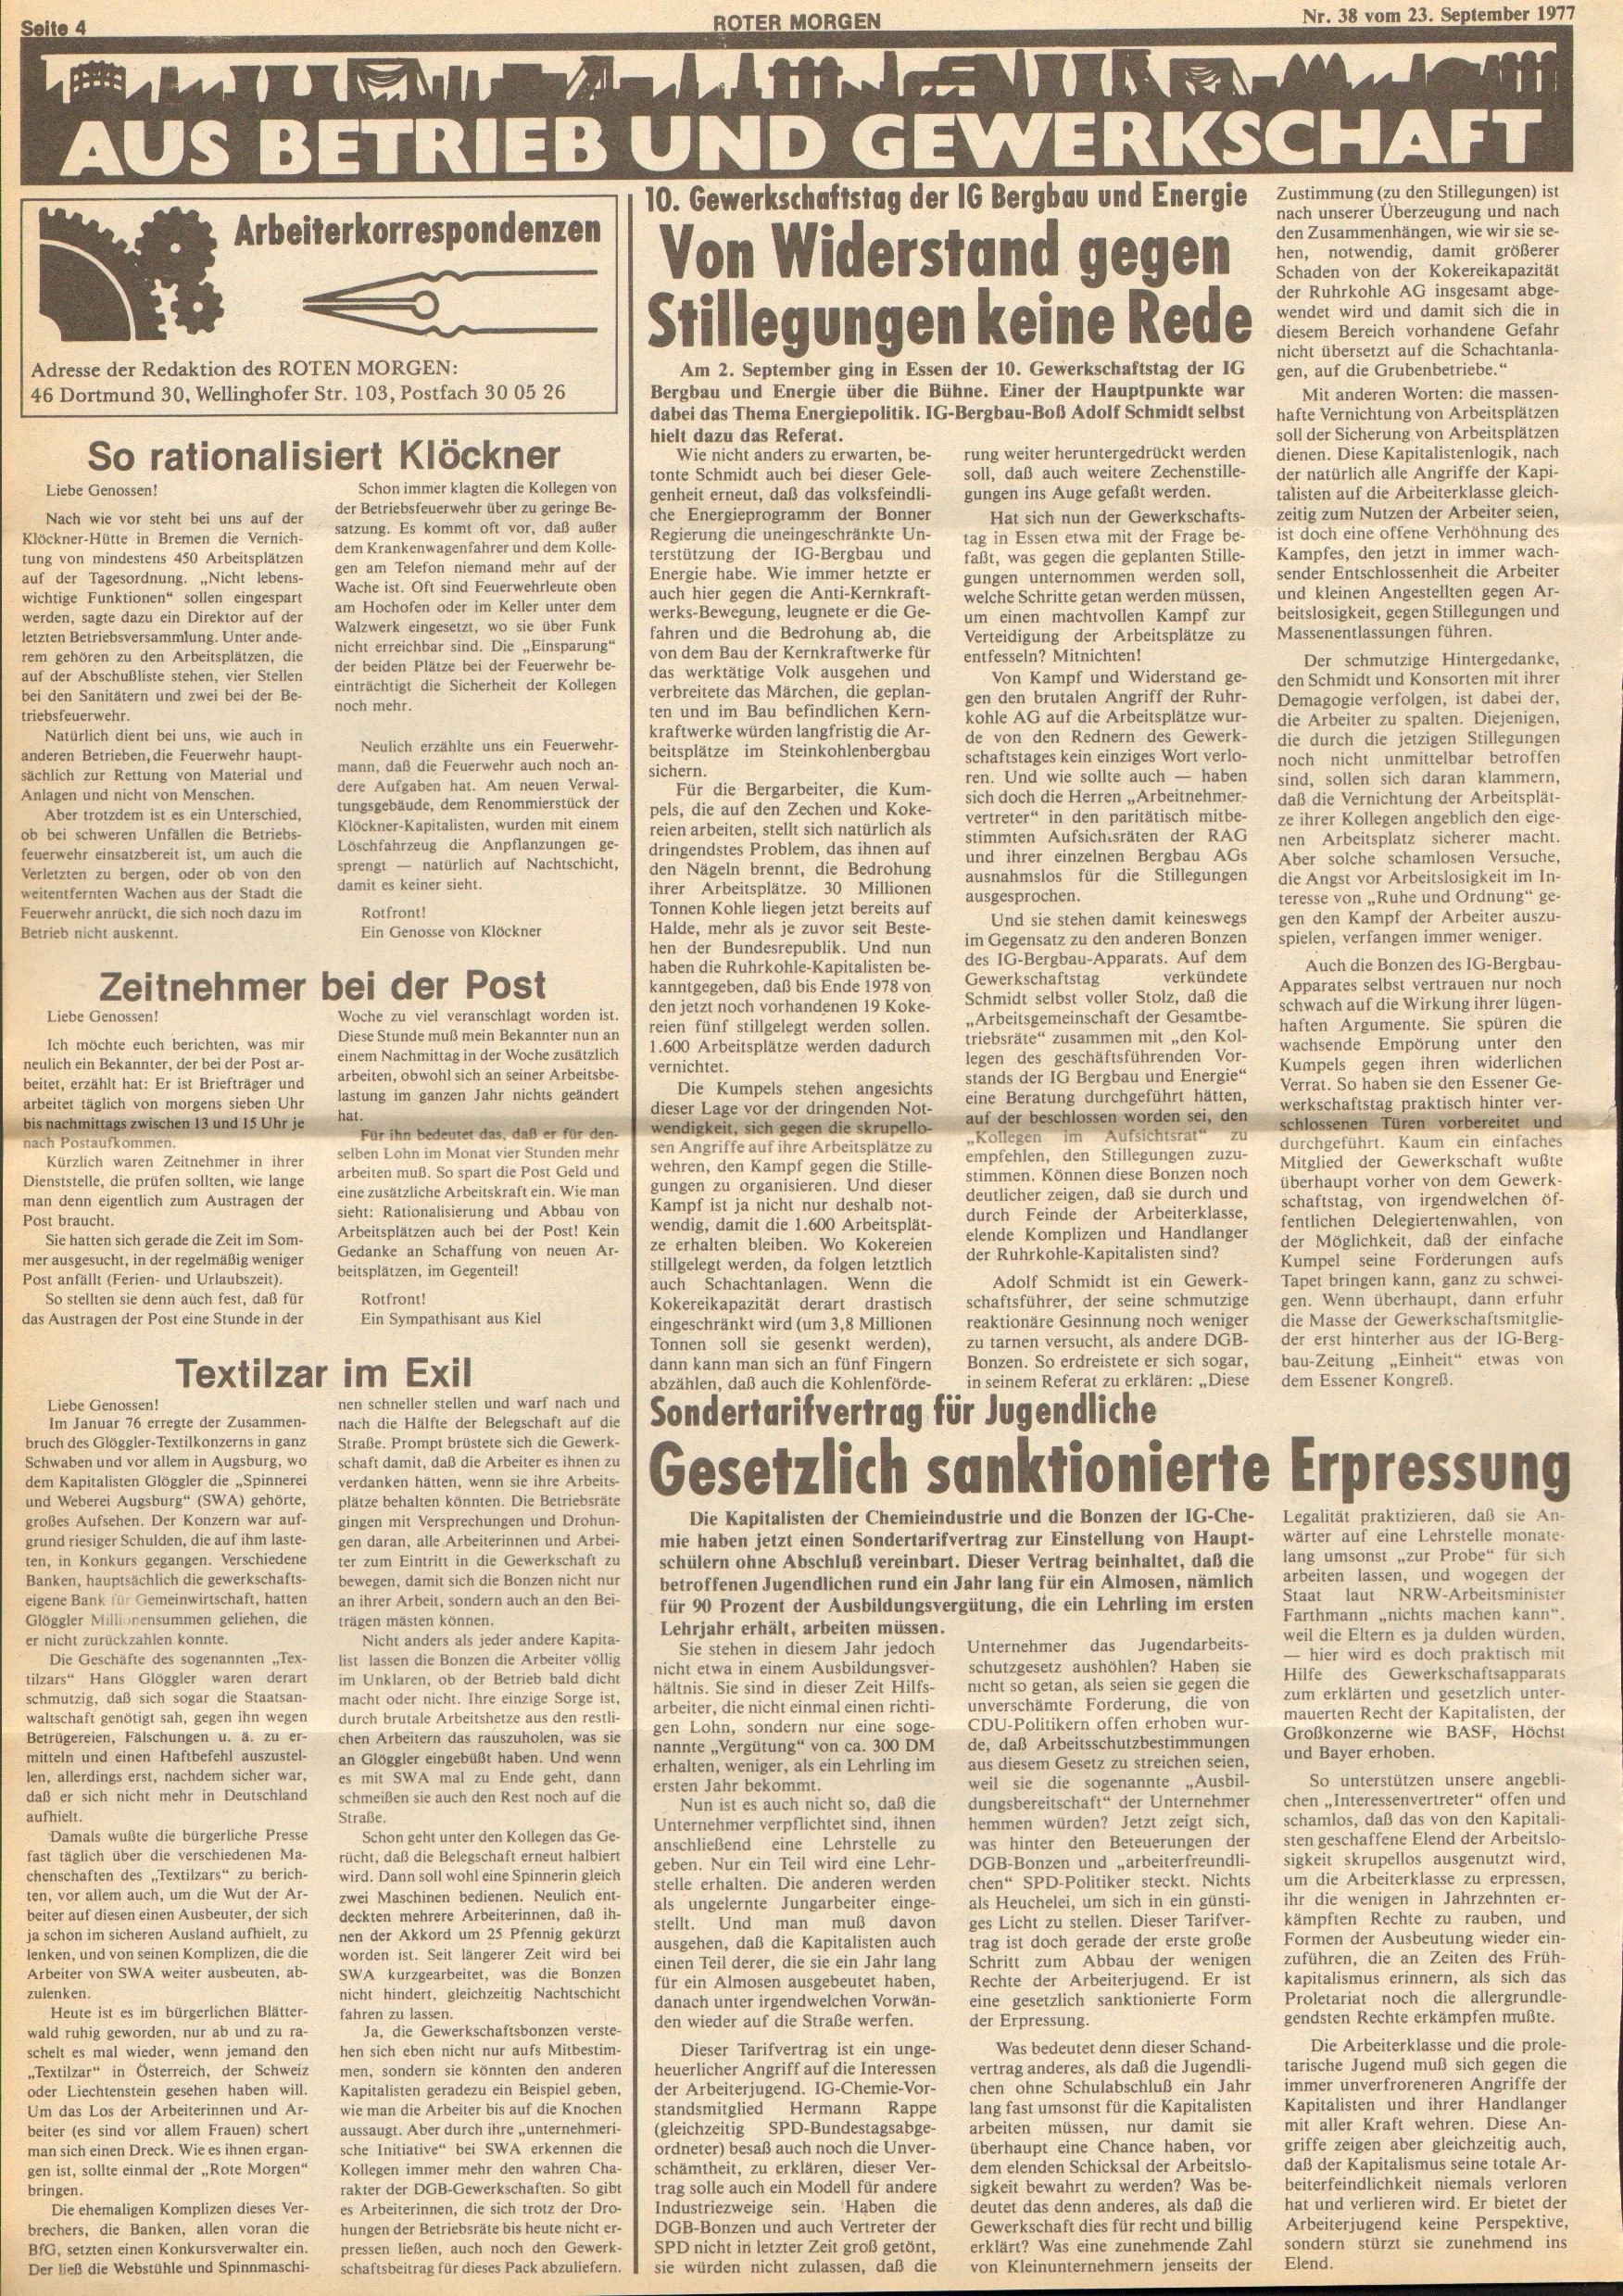 Roter Morgen, 11. Jg., 23. September 1977, Nr. 38, Seite 4